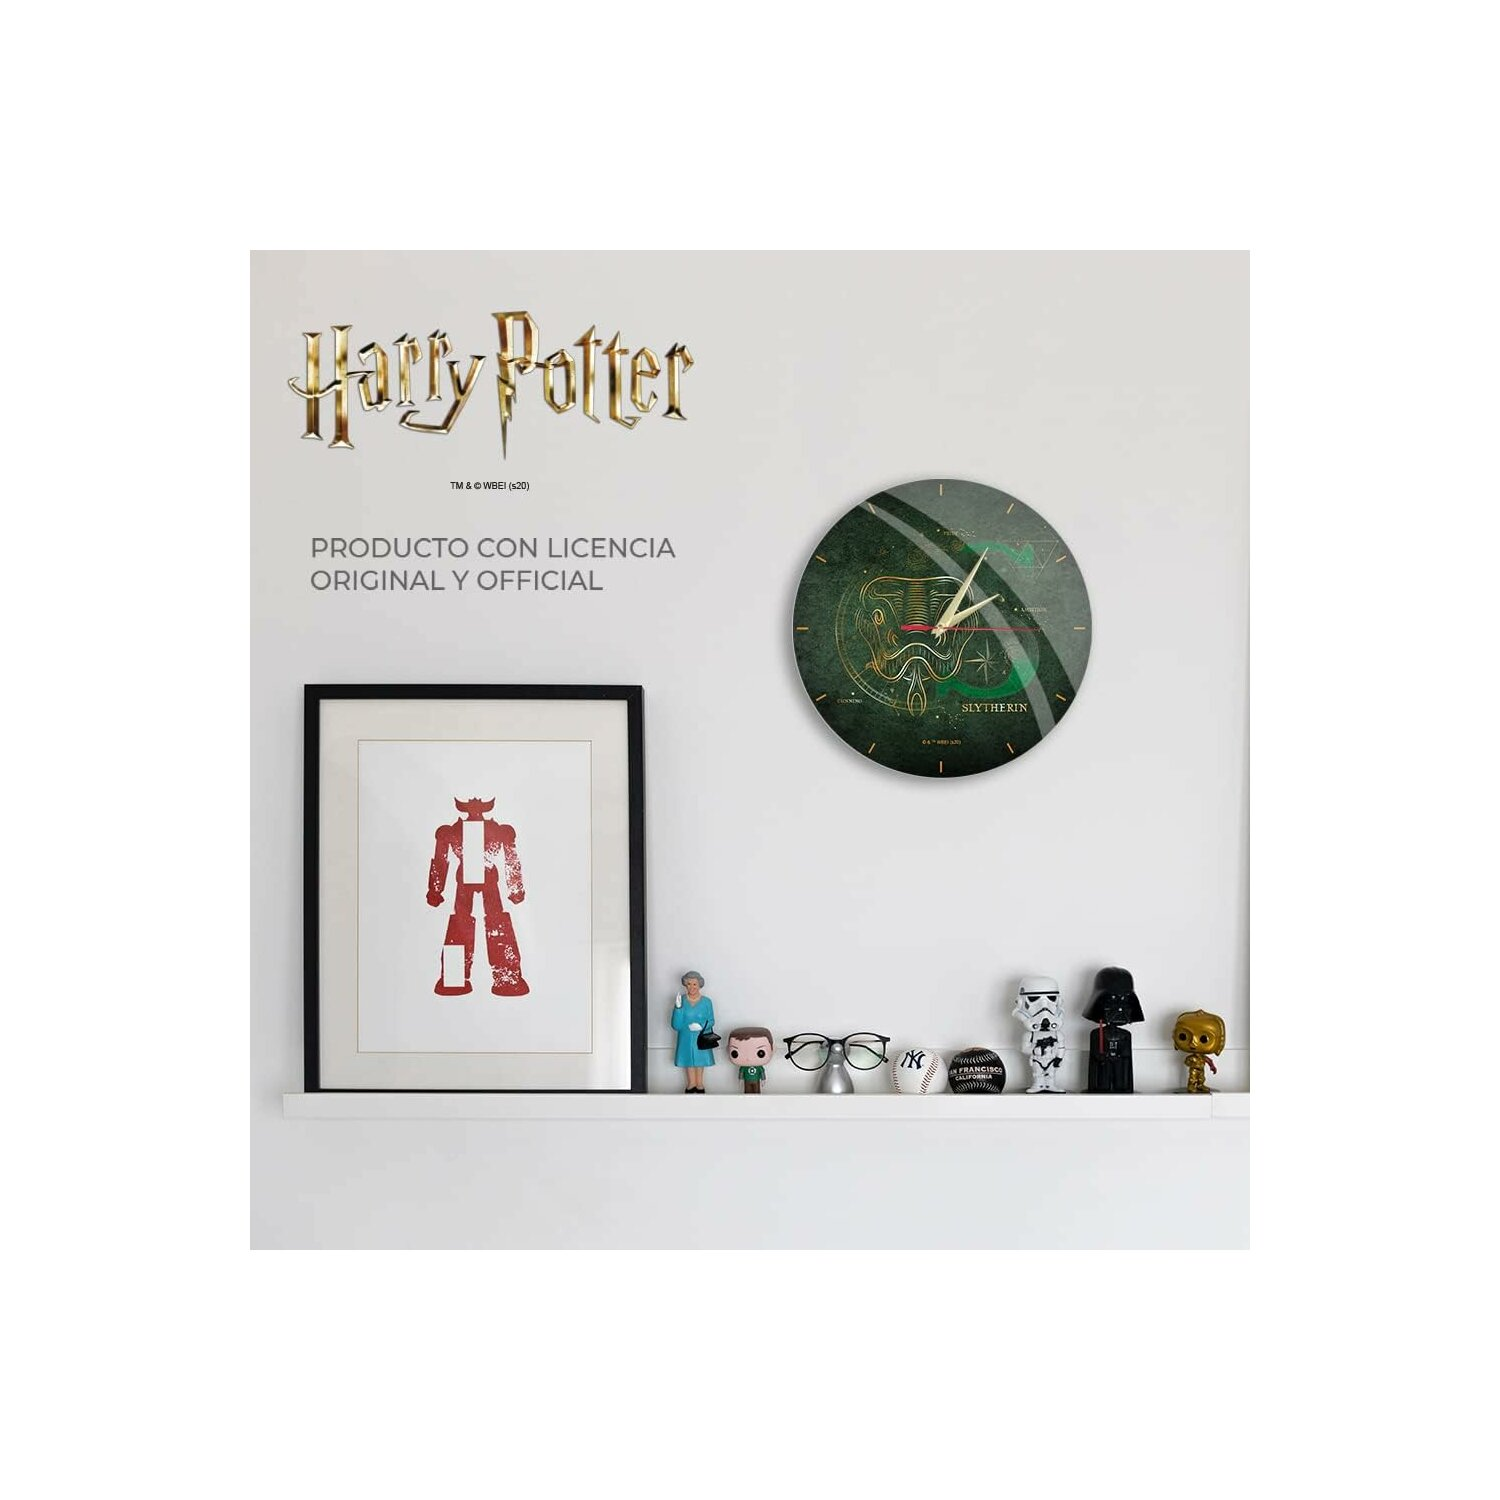 Hogwarts 019 Wanduhr HARRY POTTER